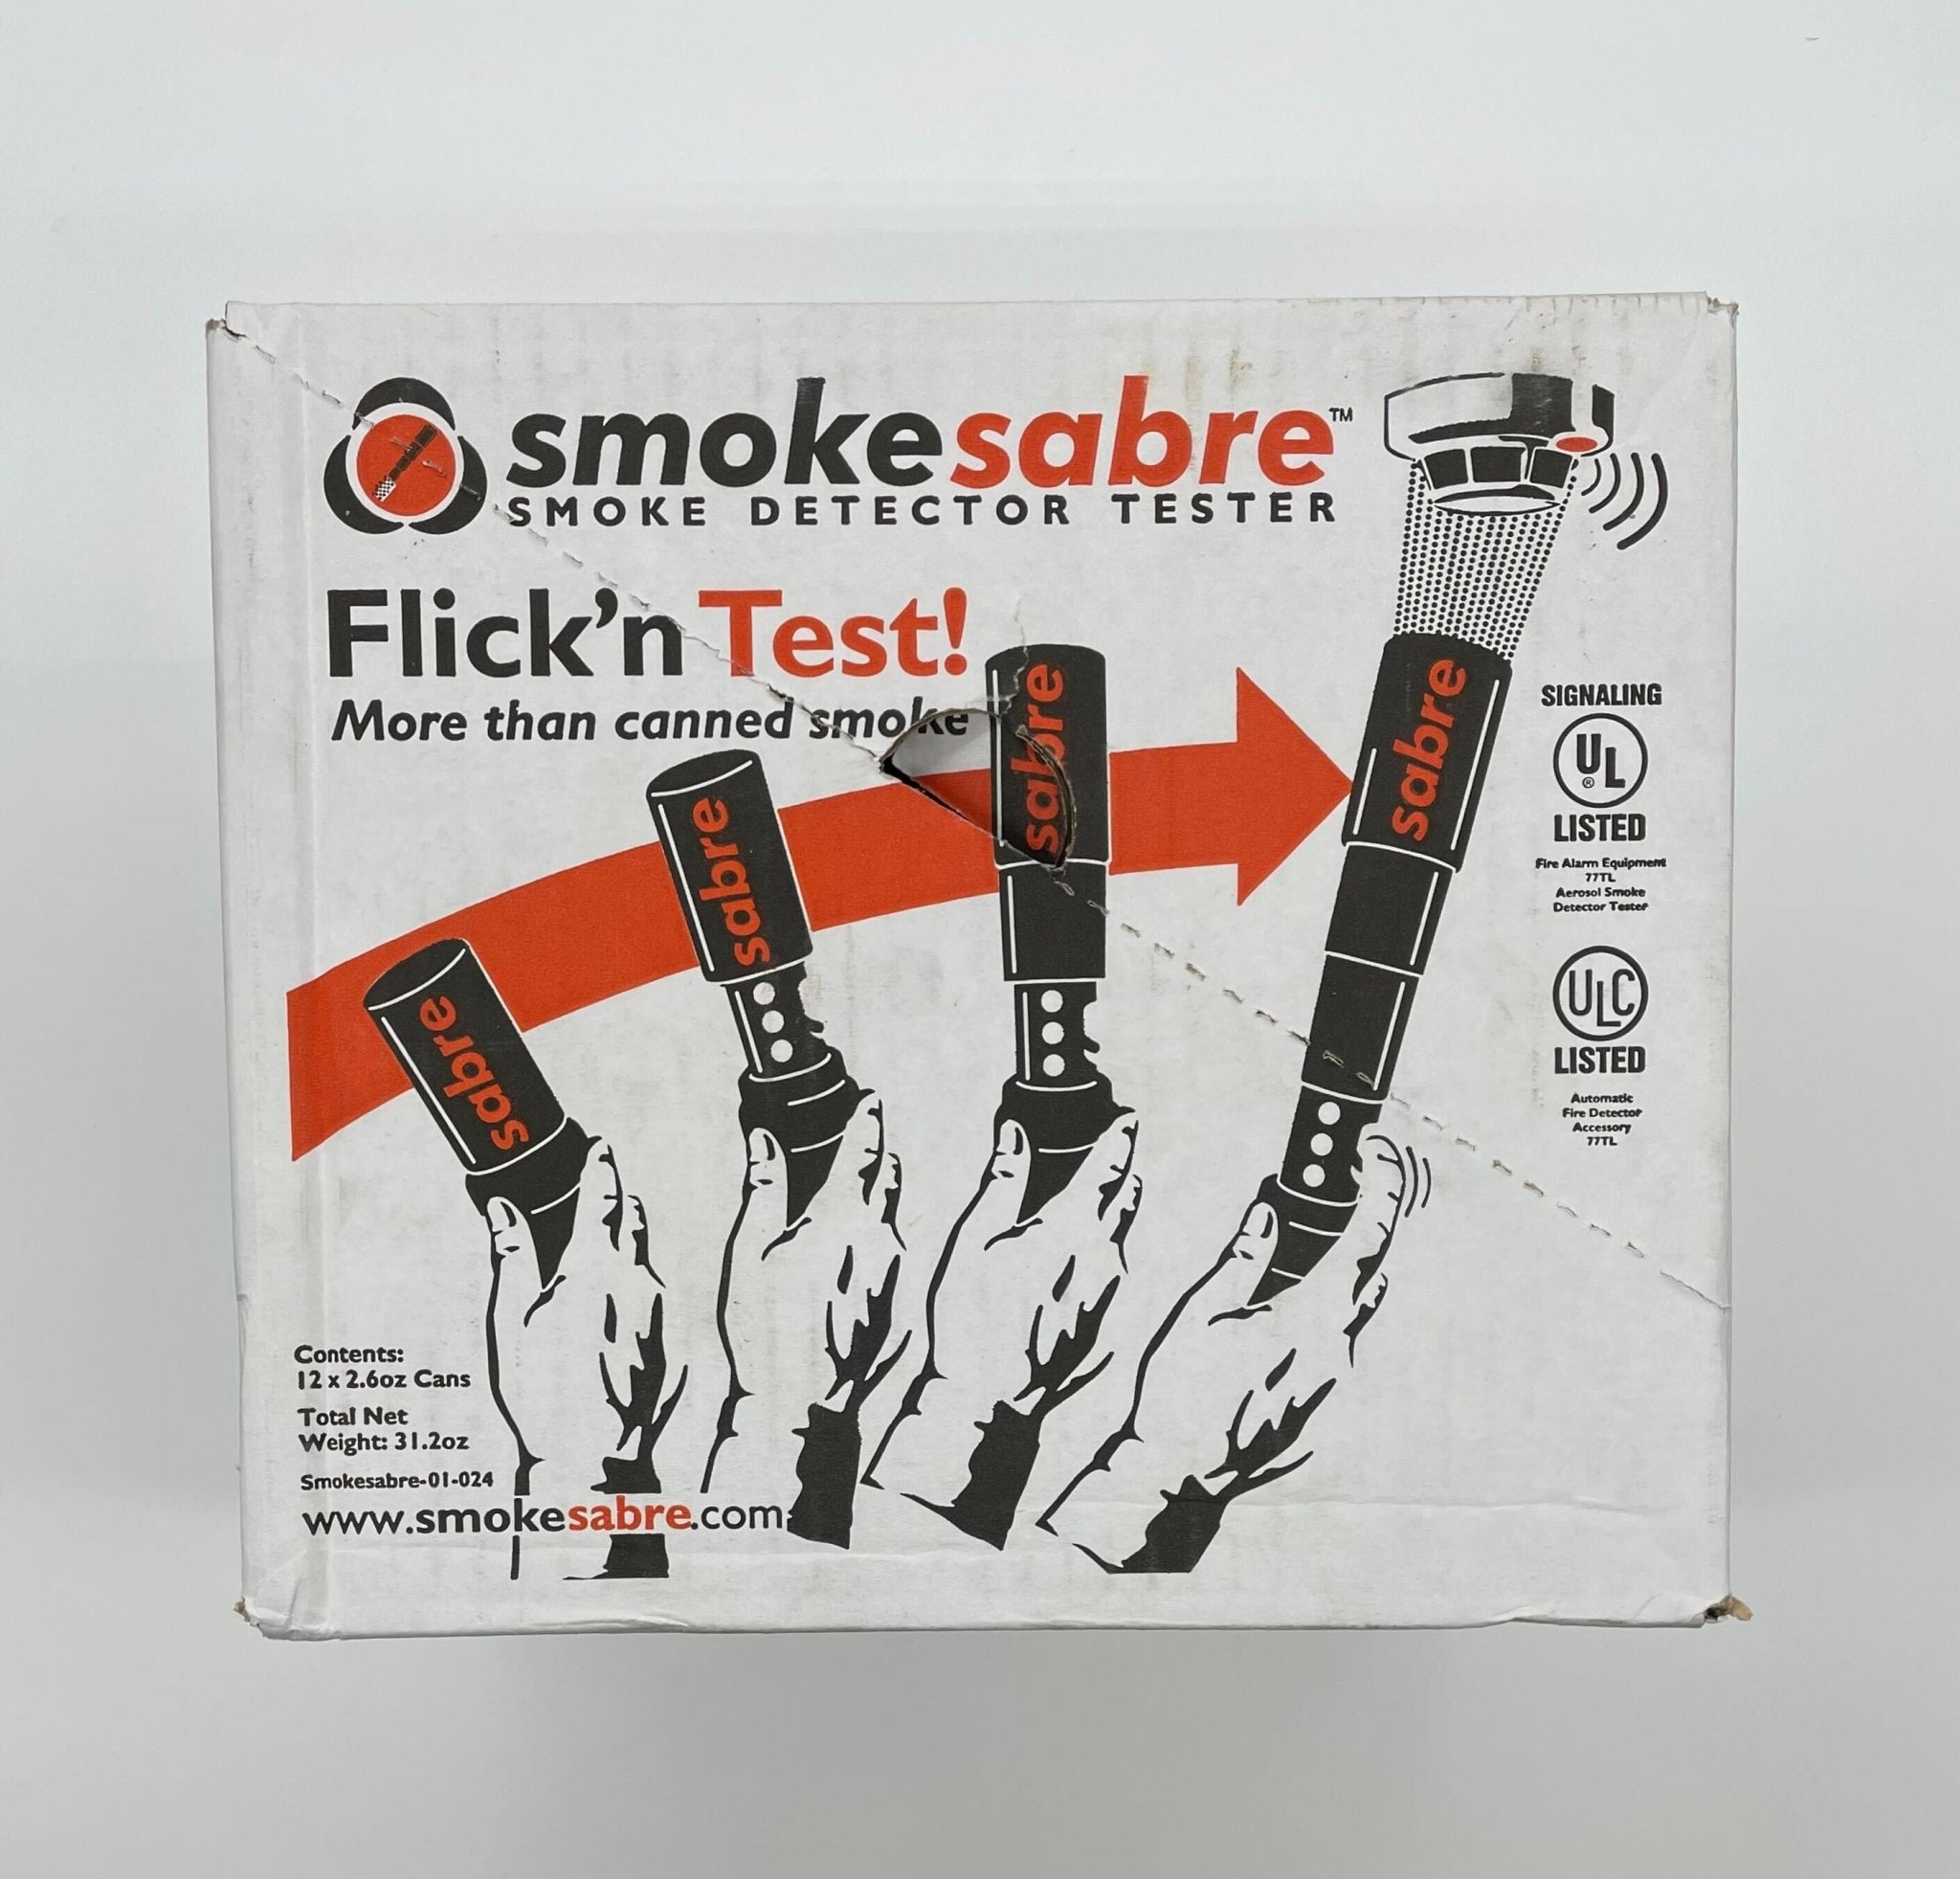 SDi SABREBP Aerosol Smoke Detector Tester - The Fire Alarm Supplier